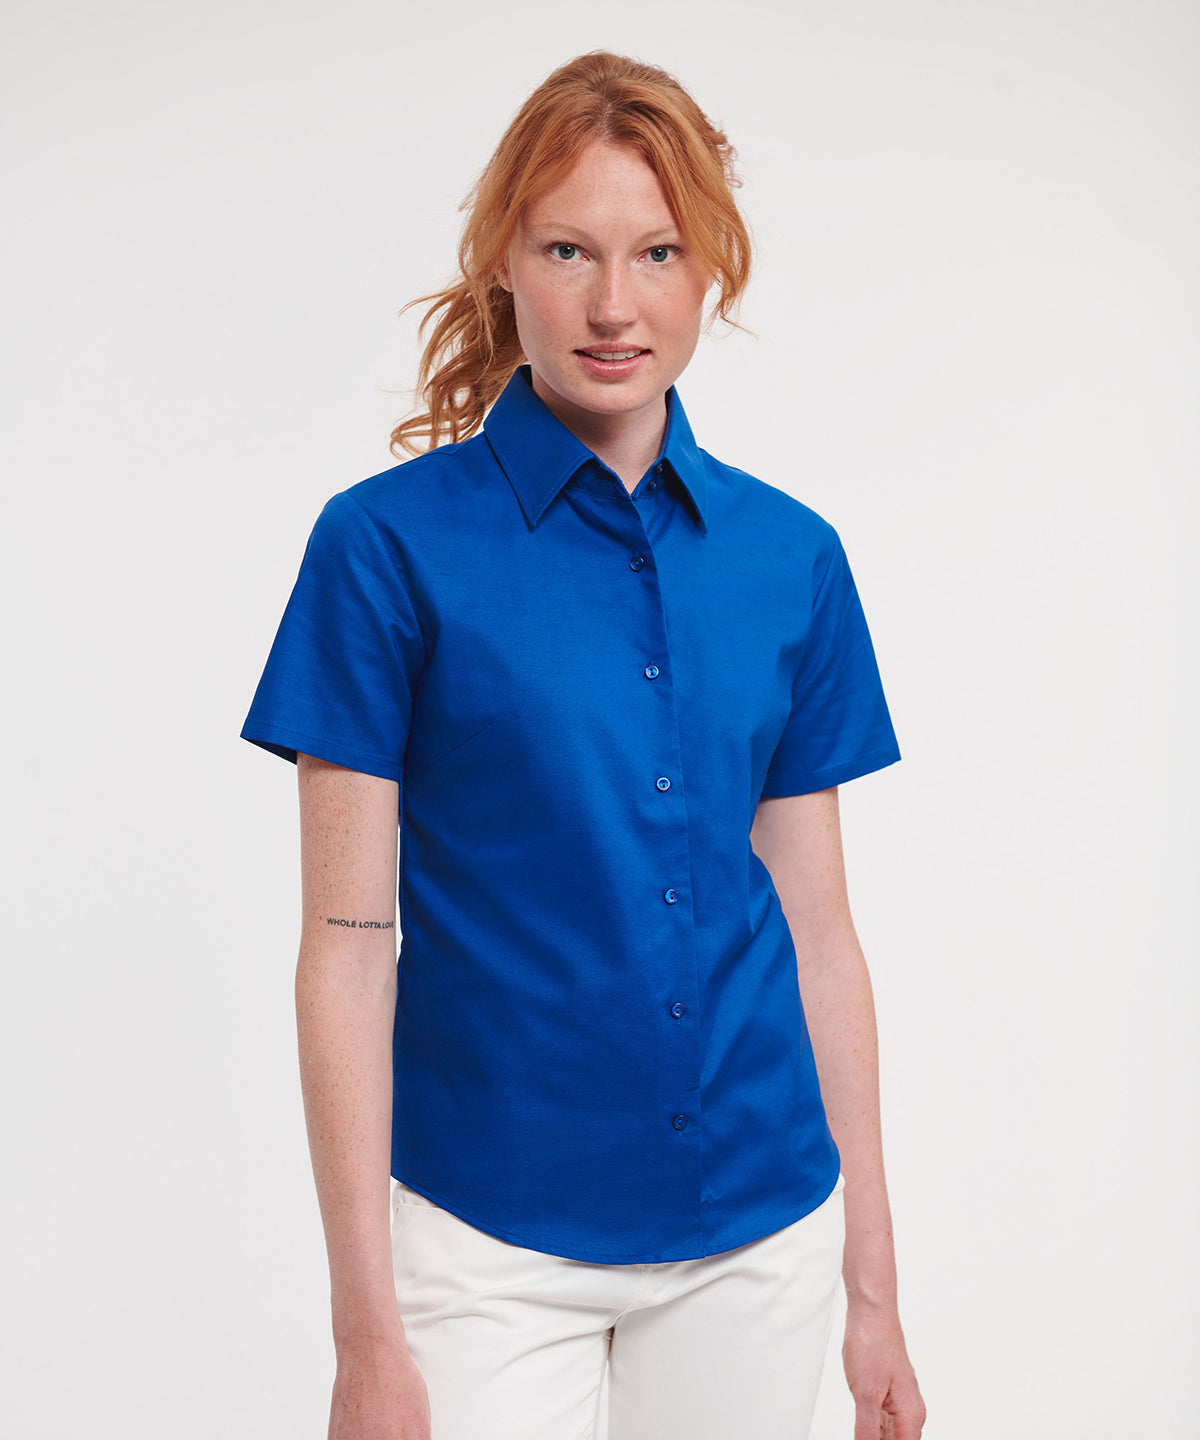 Bolir - Women's Short Sleeve Oxford Shirt